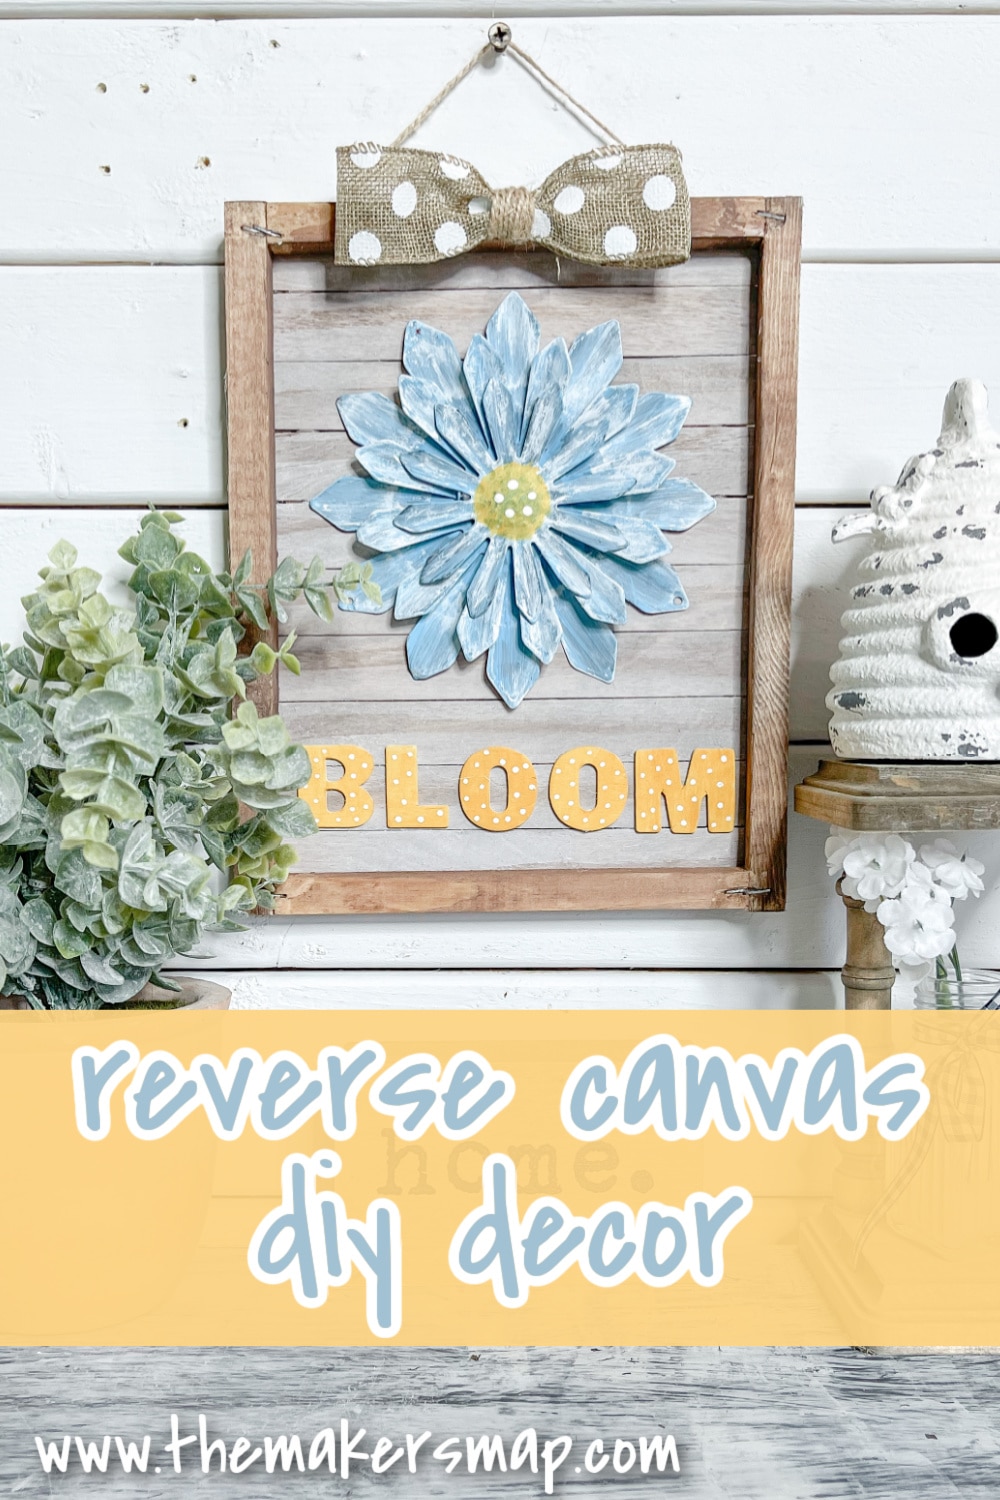 Easy Reverse Canvas DIY Decor for Summer or Spring